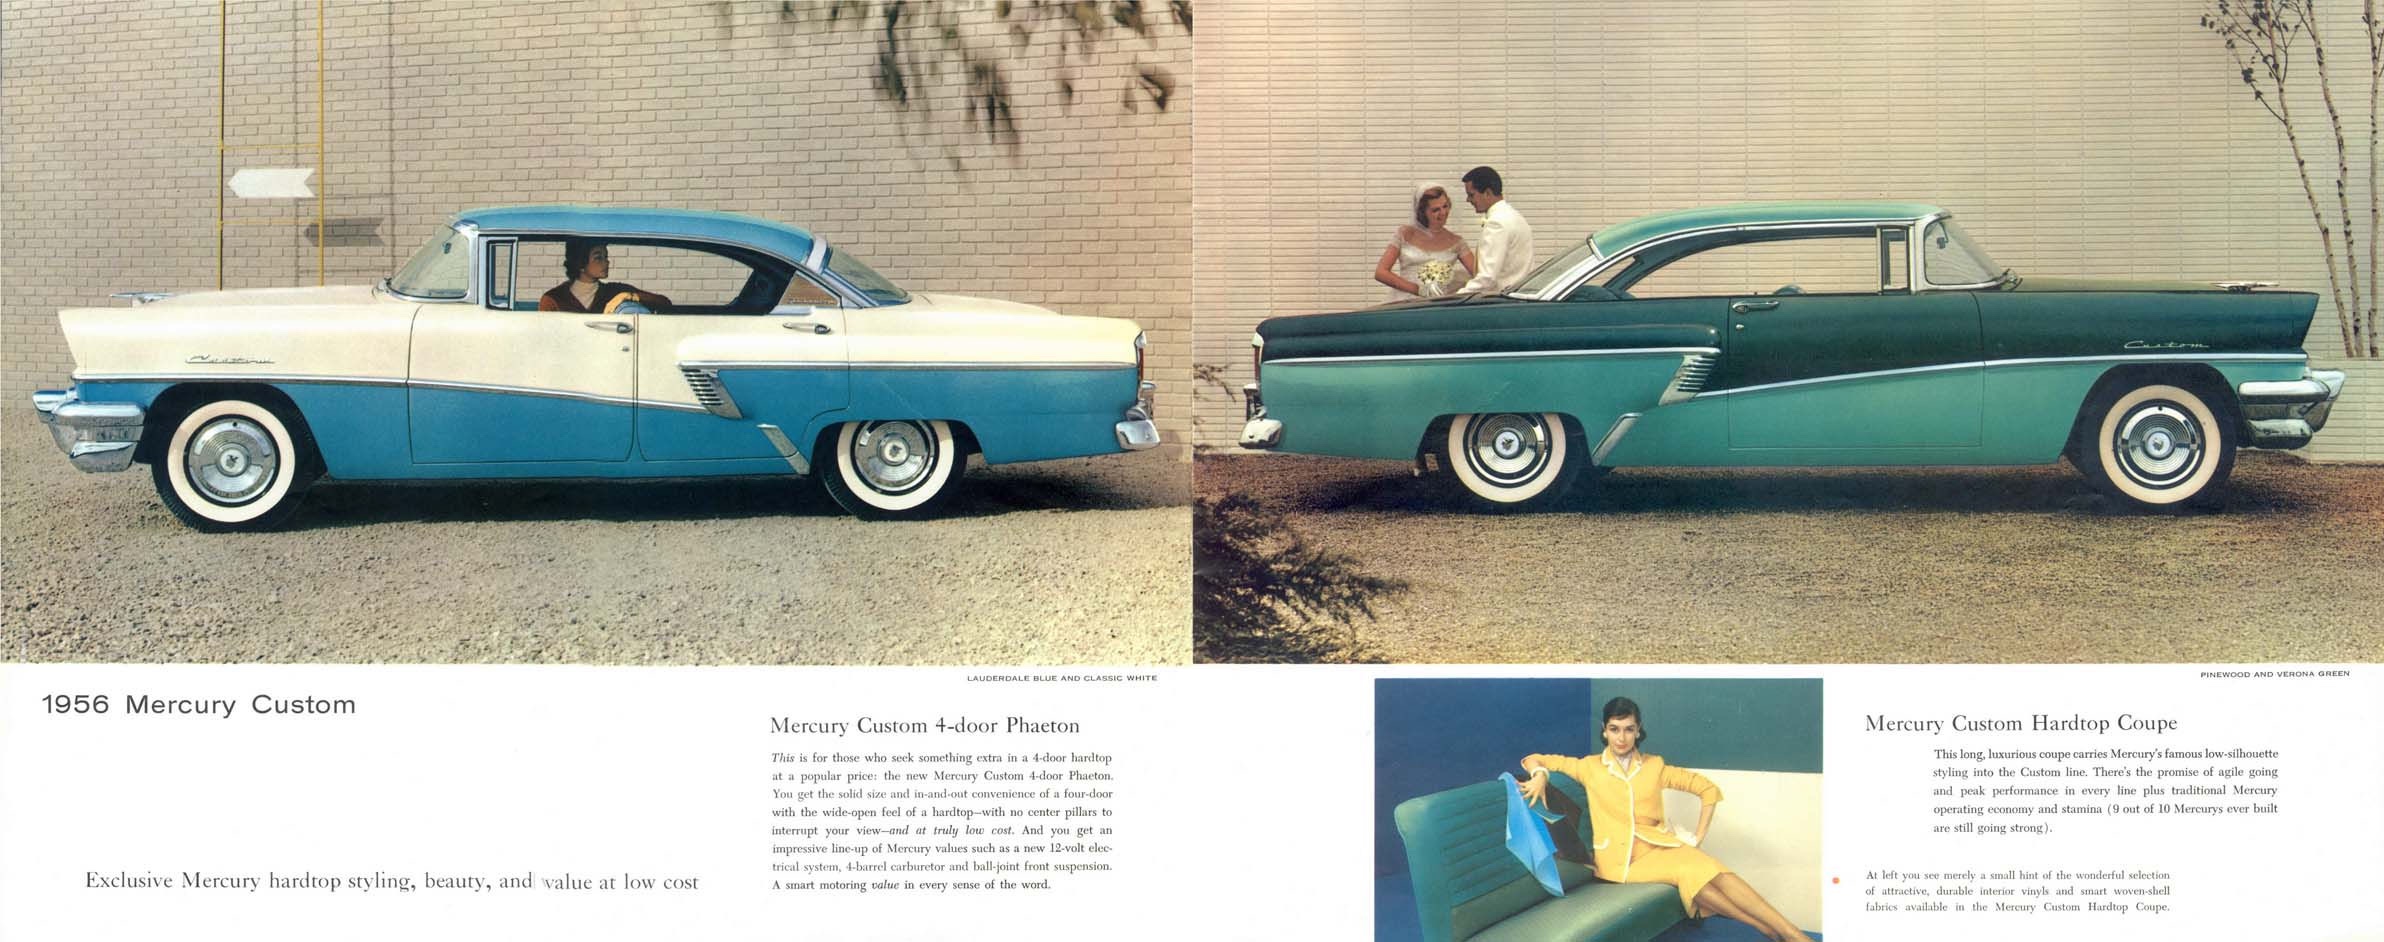 1956 Mercury Hardtops Brochure Page 3